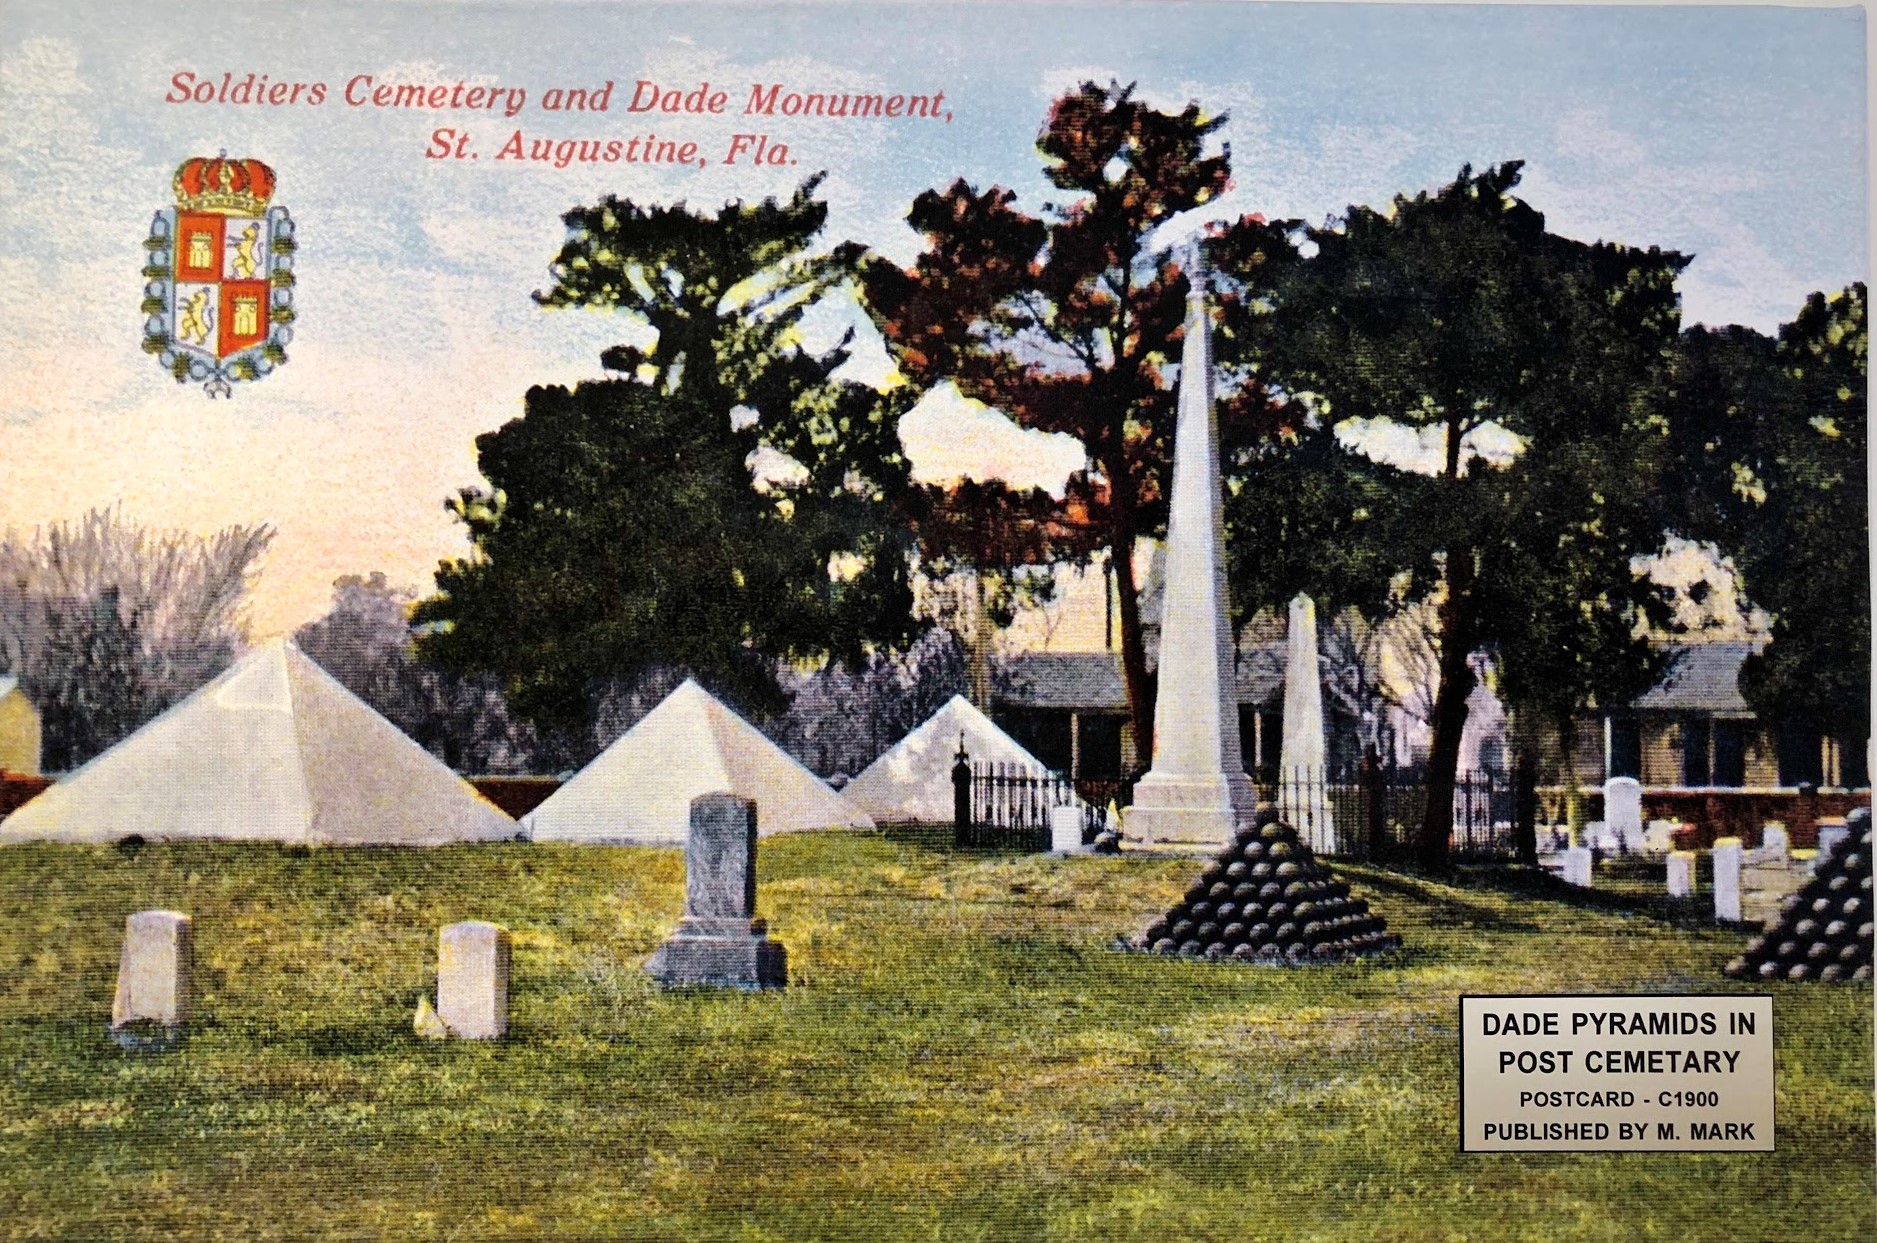 Postcard showing pyramids and obelisk